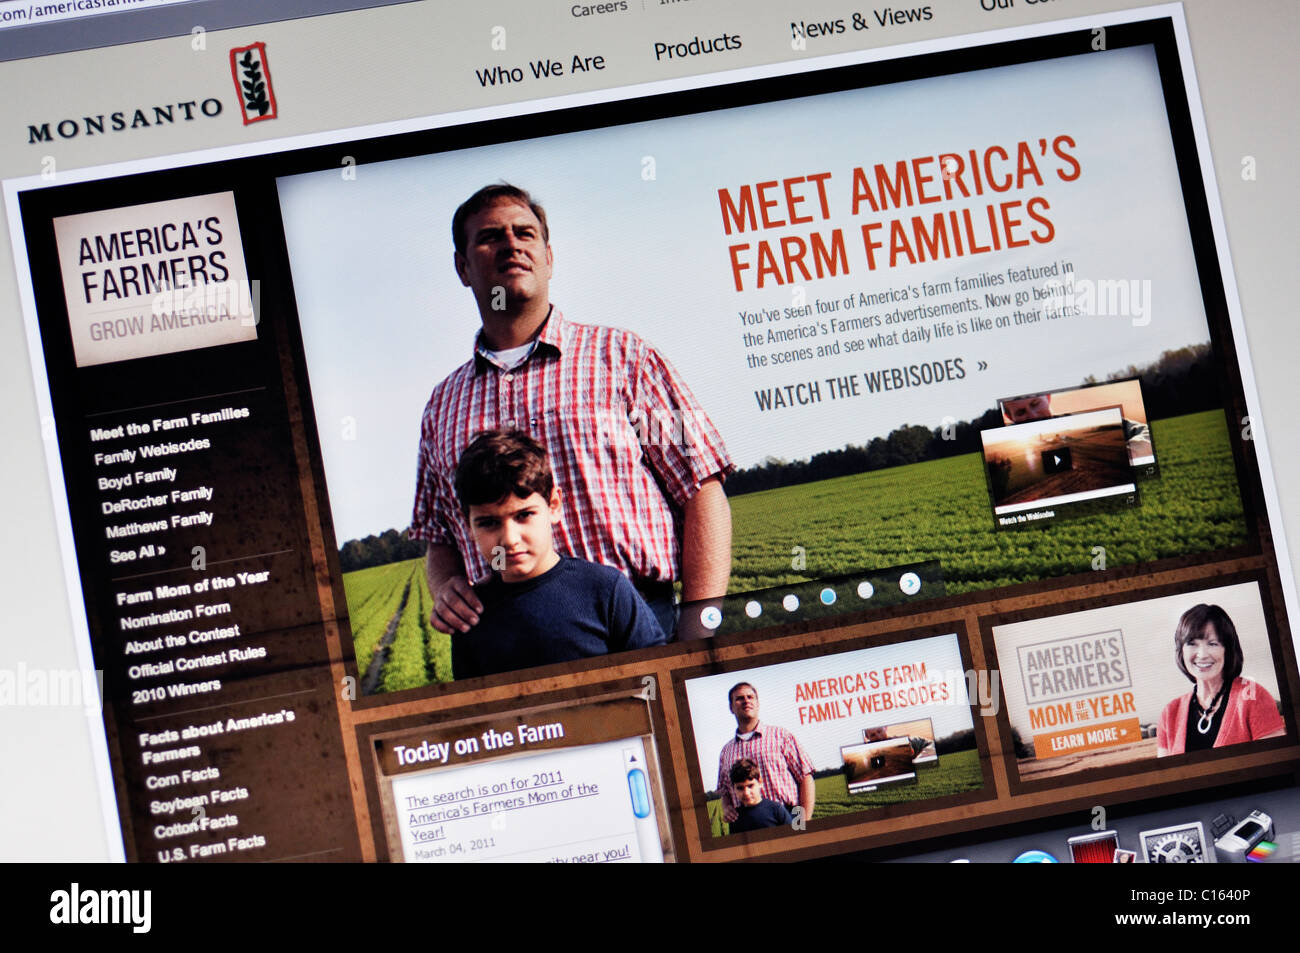 Monsanto-Website - genetisch veränderte Lebensmittel und Saatgut  corporation Stockfotografie - Alamy